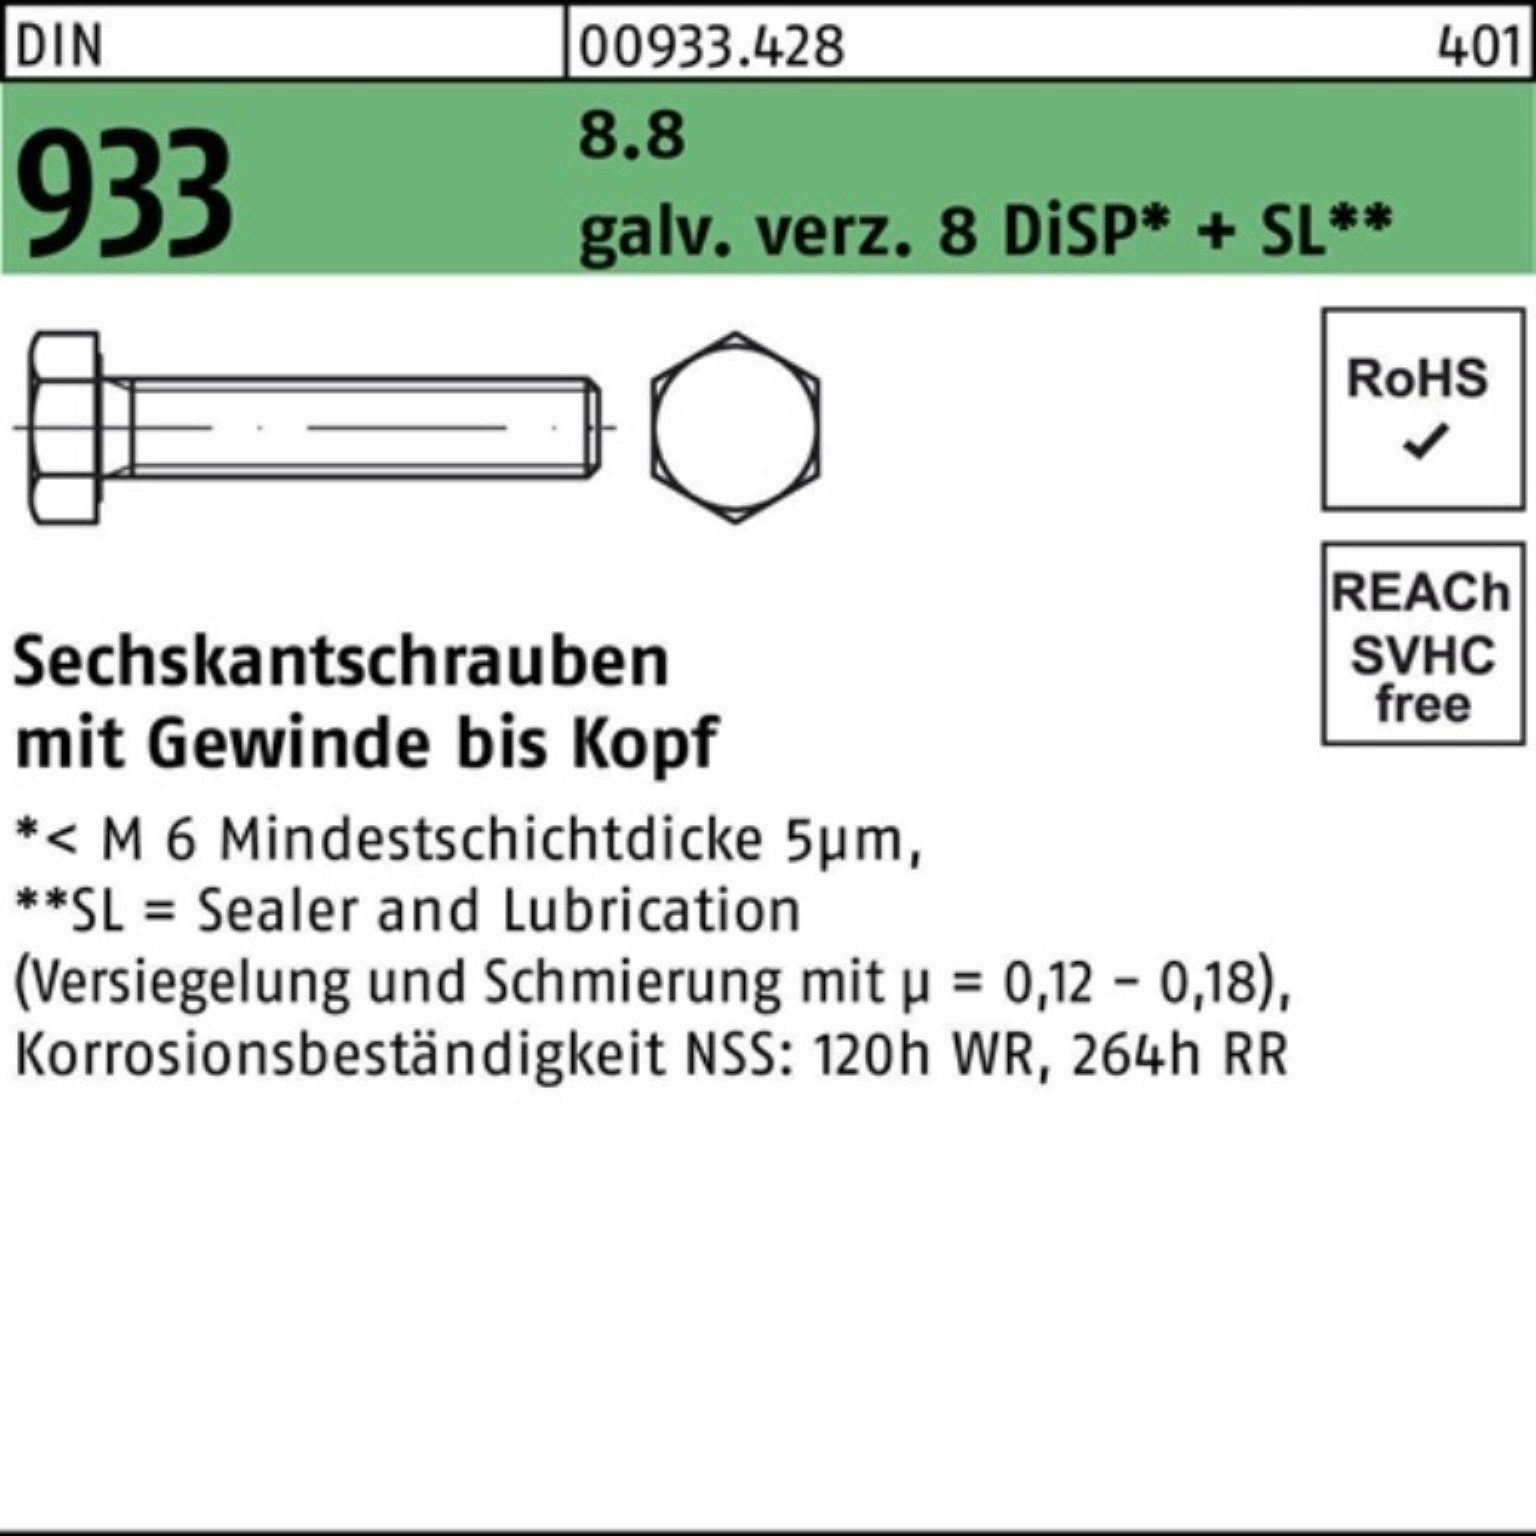 Reyher Sechskantschraube 8.8 SL 8 Sechskantschraube Zn M16x 45 + DiSP Pack 933 DIN 100er gal VG